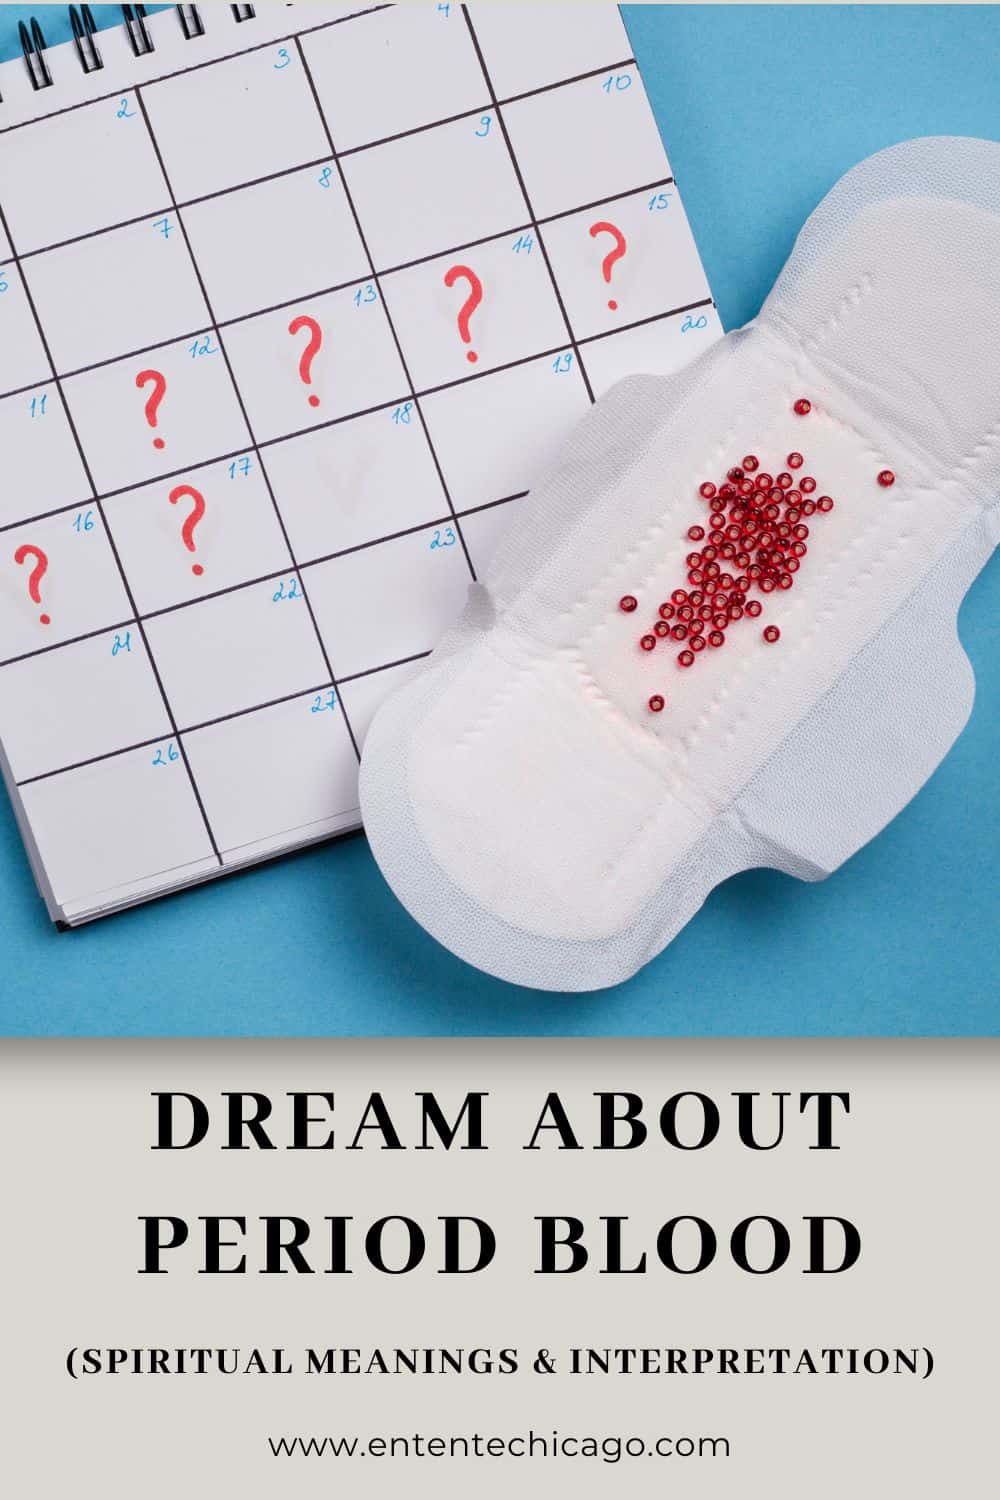 Key Symbolism of Dreams of Menstrual Blood